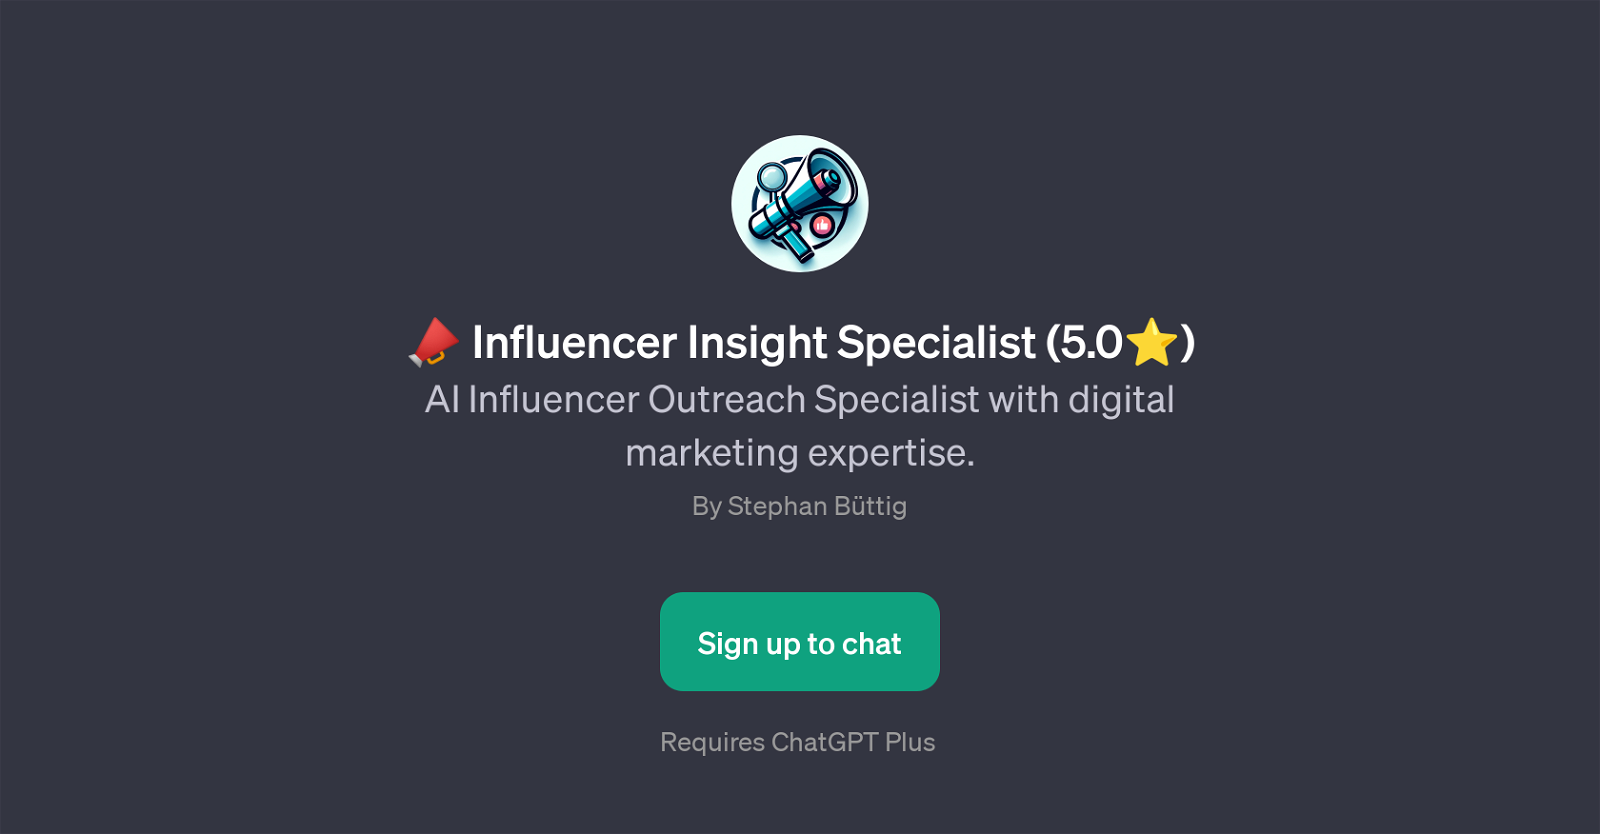 Influencer Insight Specialist website